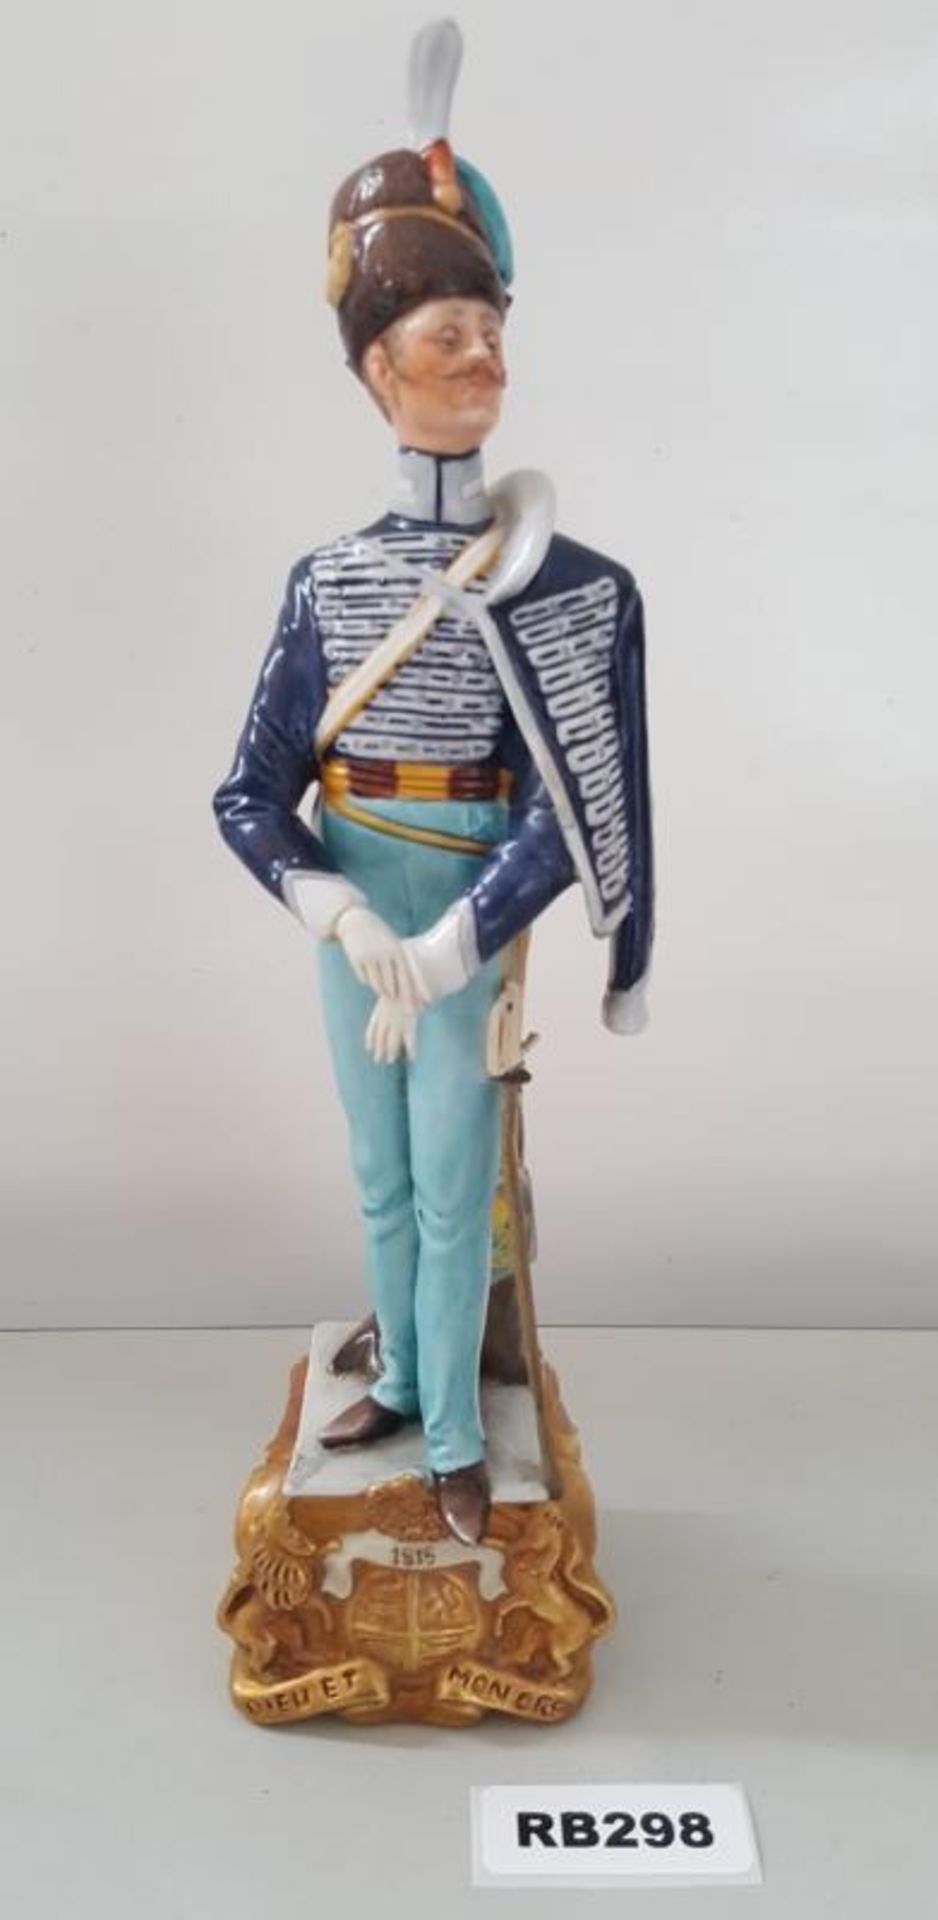 1 x Rare Italian Capodimonte Porcelain Bruno Merli Soldiers Figurines 1815- Ref RB298 E